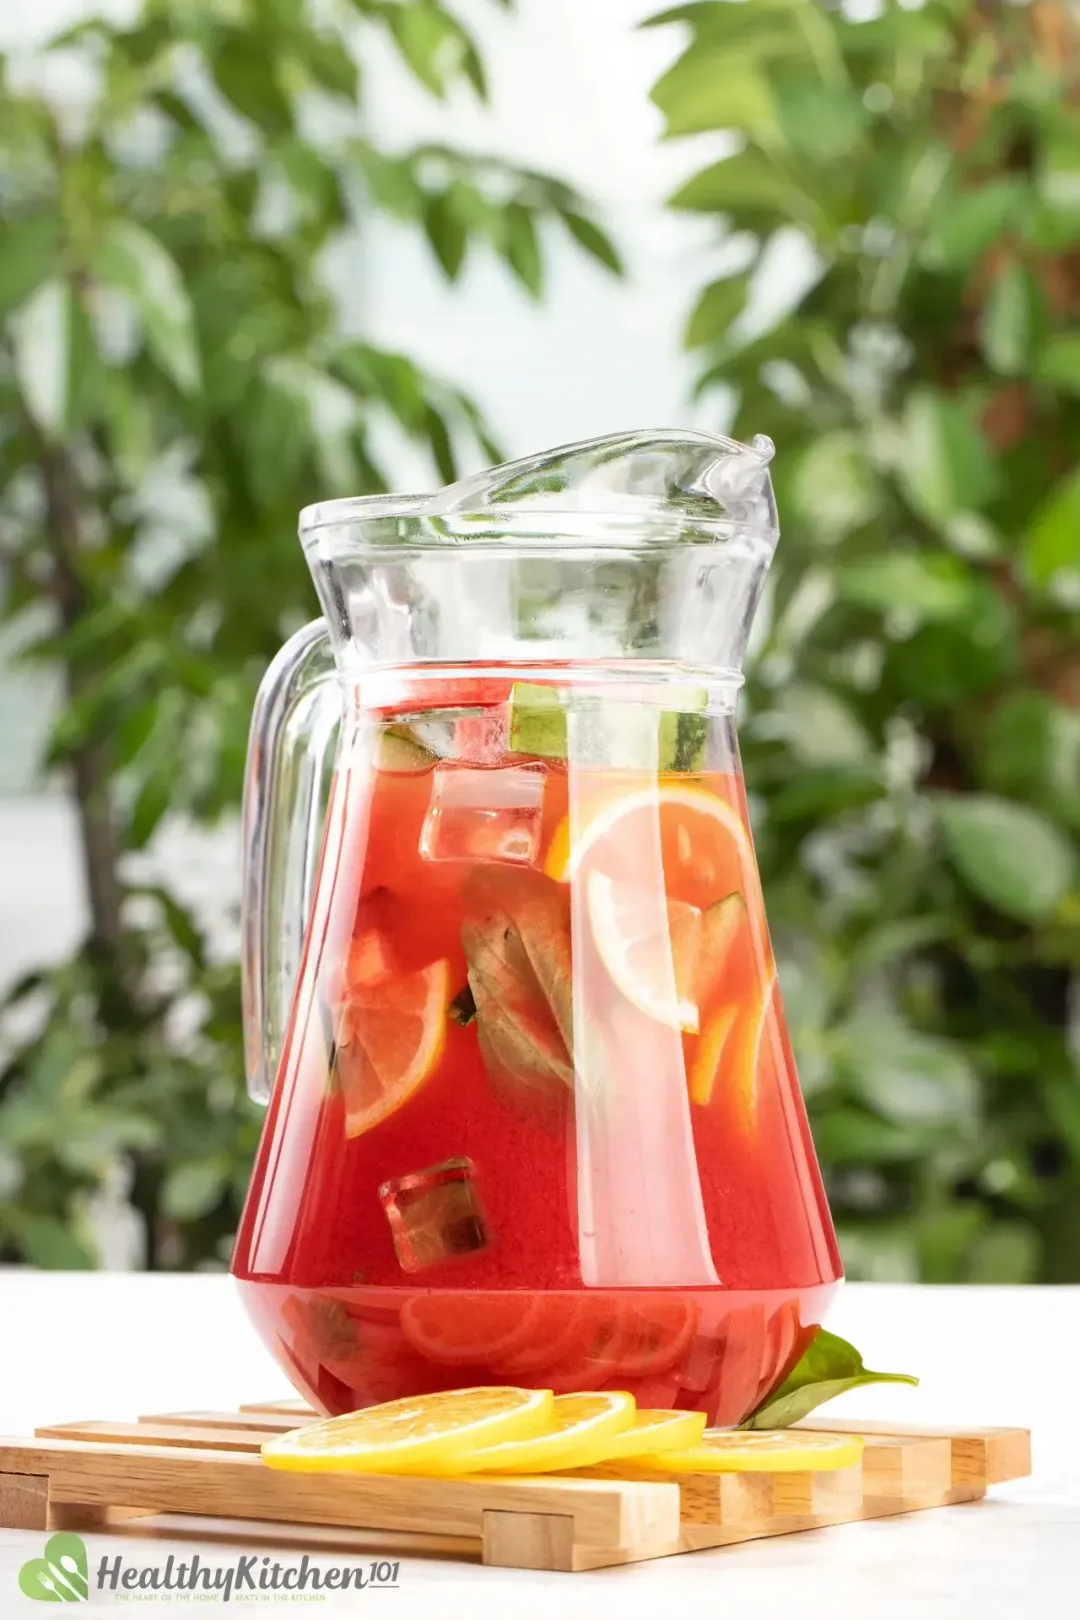 How to Make Watermelon Jungle Juice